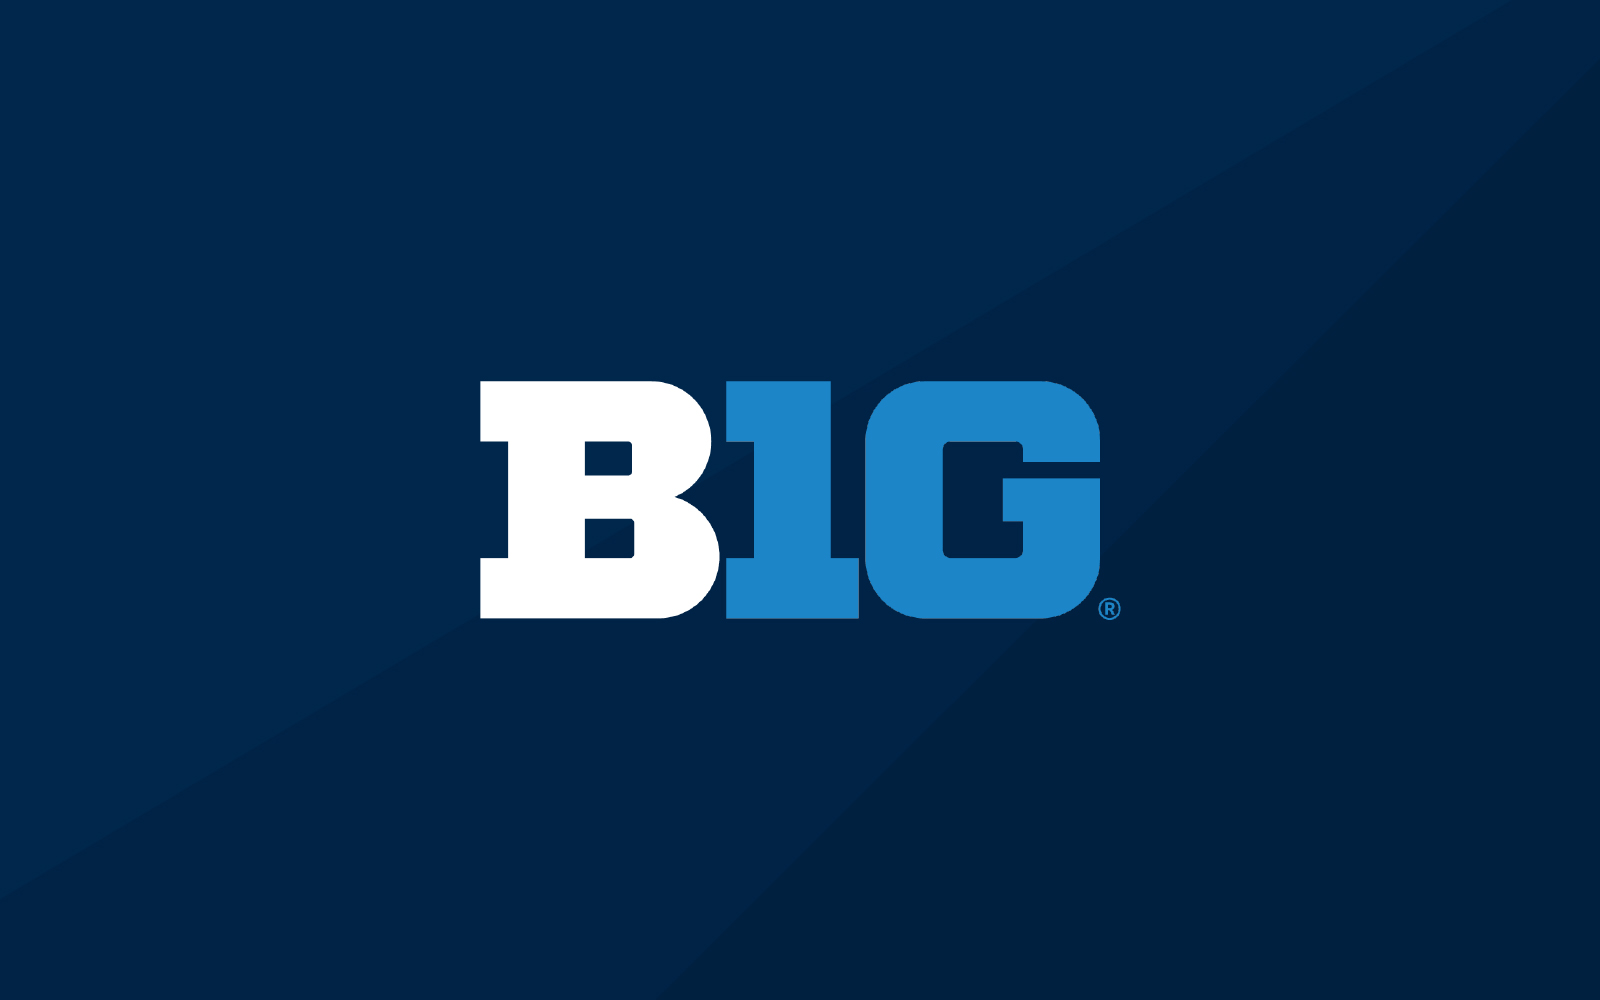 Big Ten conference logo